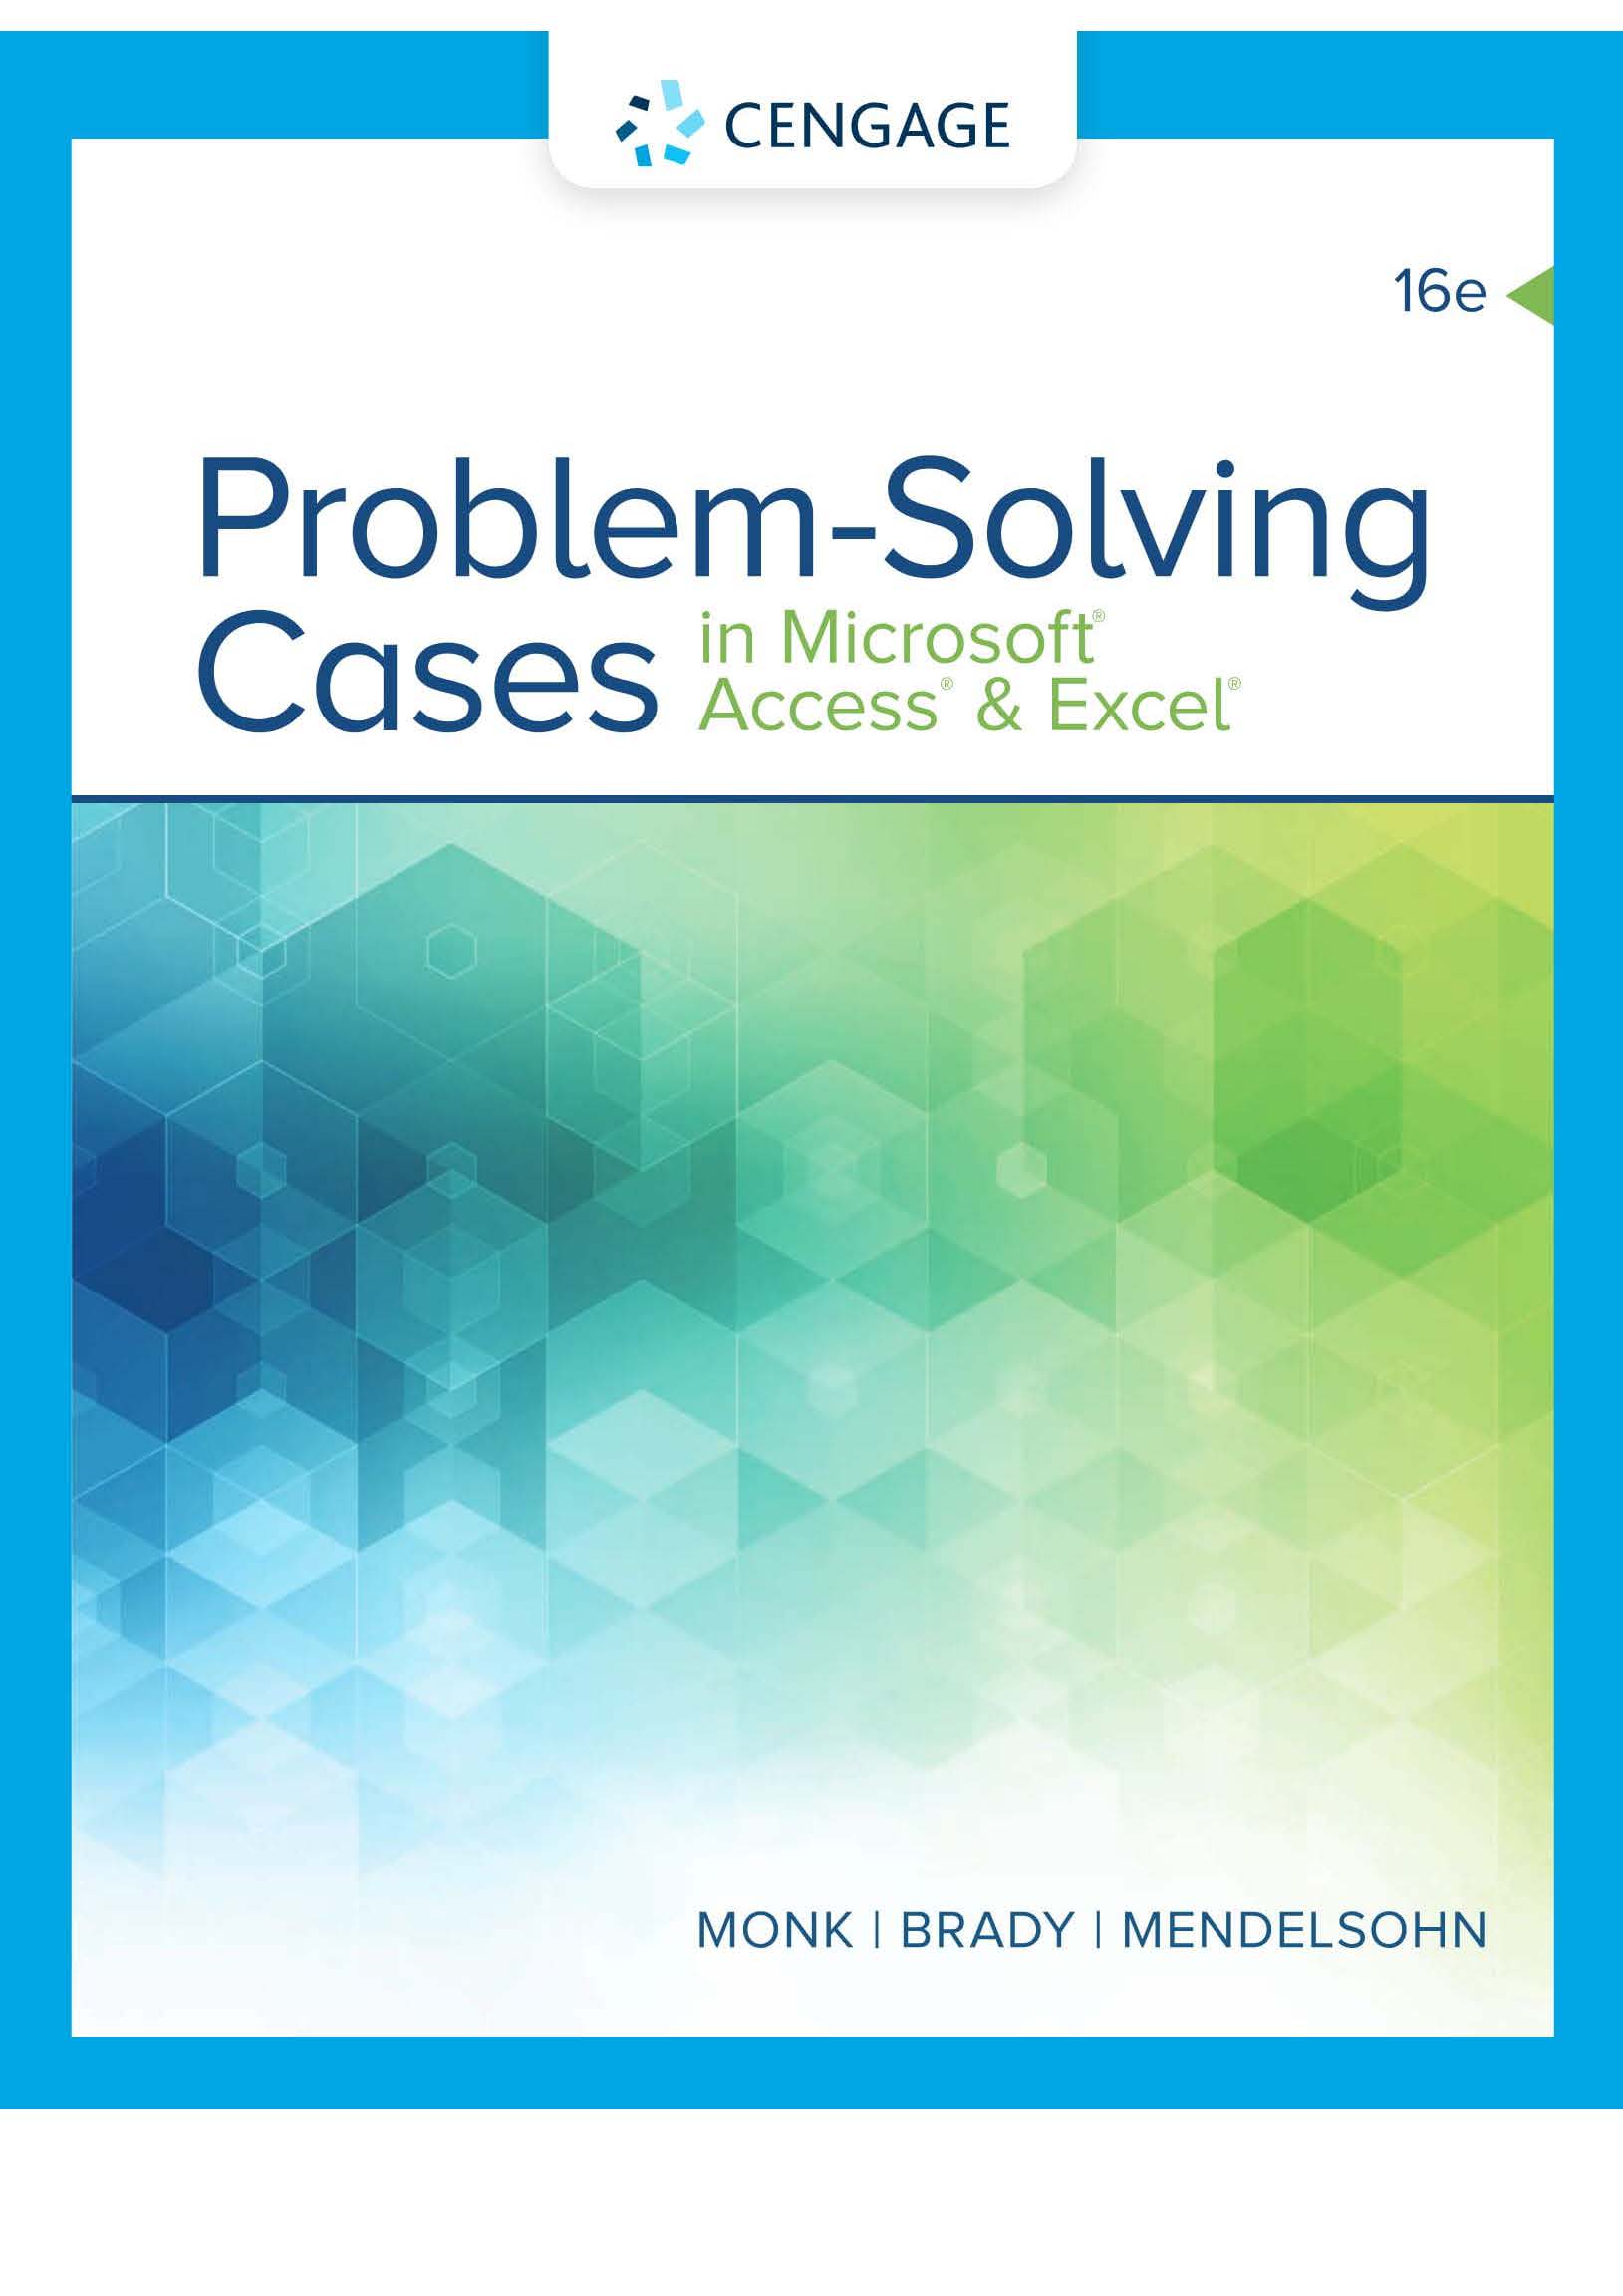 页面提取自－Problem Solving Cases In Microsoft Access & Excel 16th.jpg